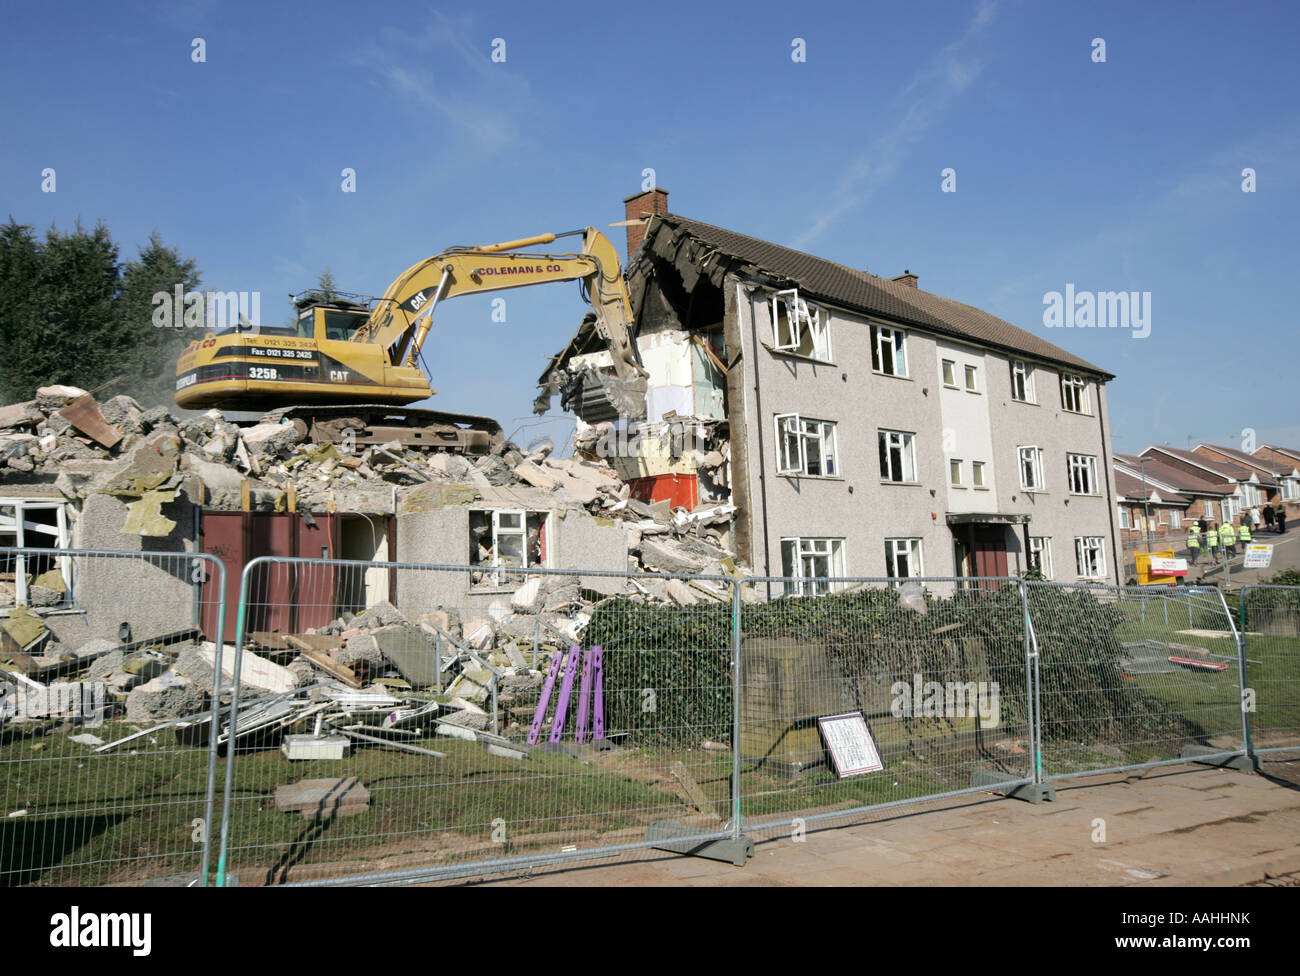 demolition. A bulldozer demolishing old council houses in Ley Hill, Northfield, Birmingham, England. Stock Photo